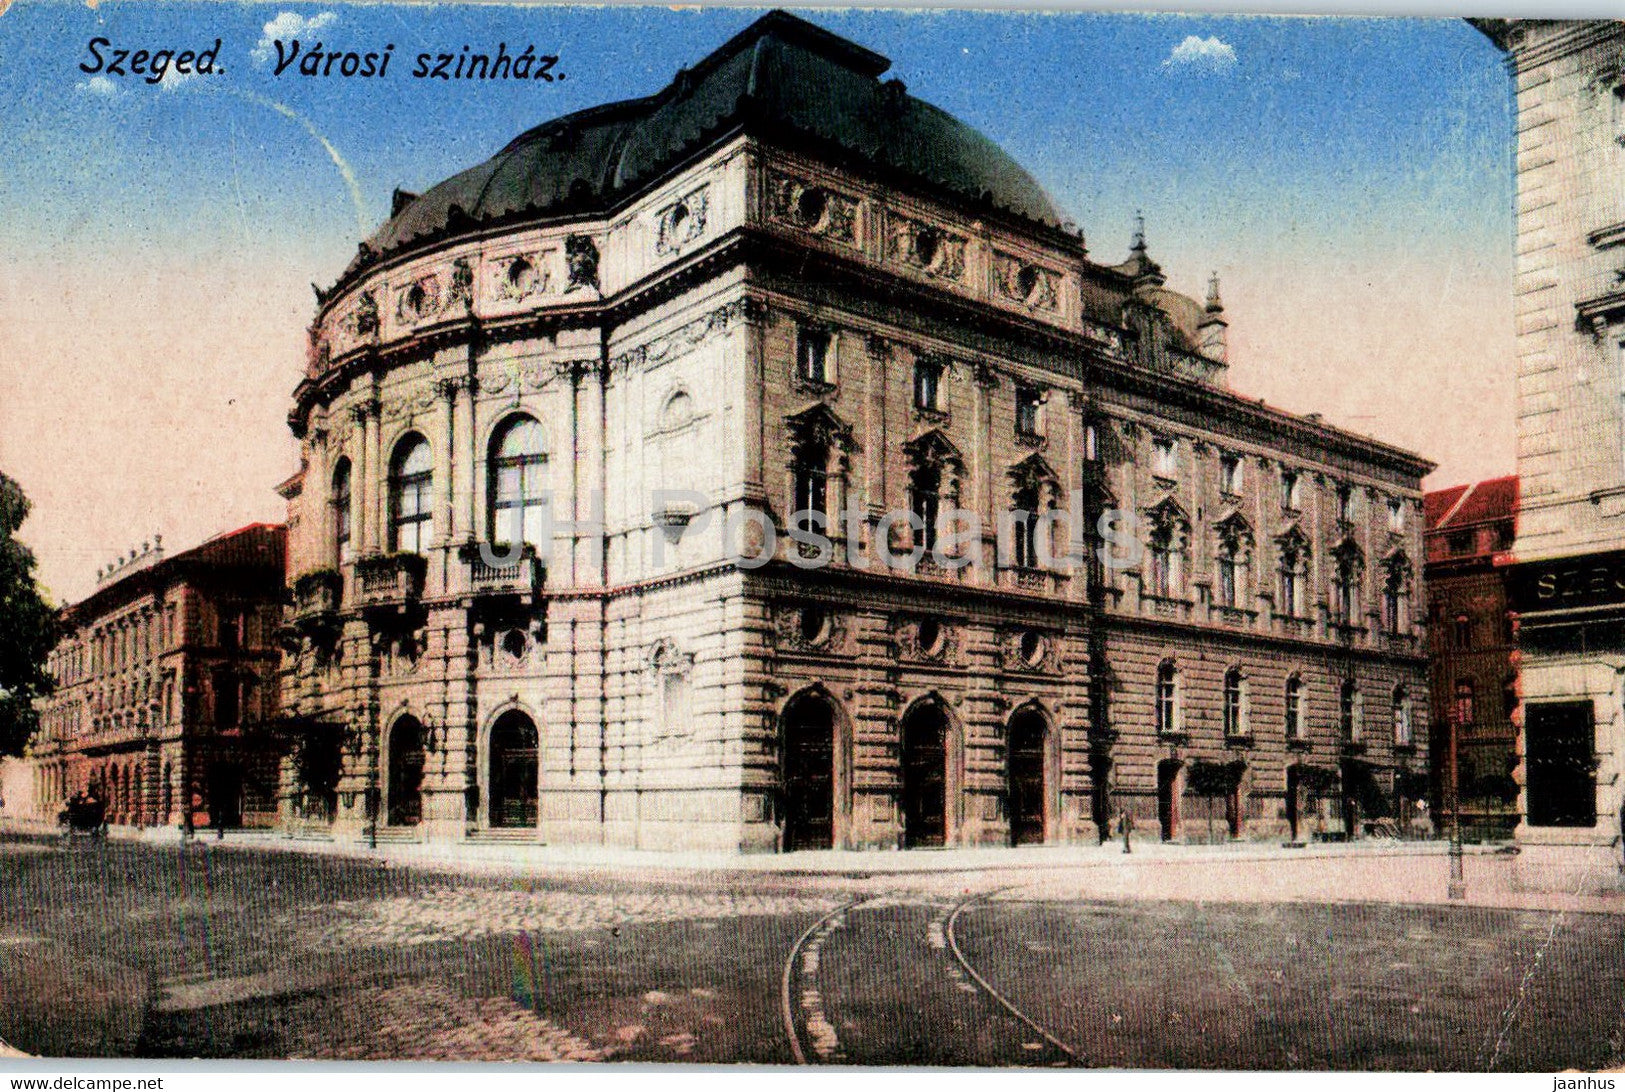 Szeged - Varosi szinhaz - theatre - old postcard - 1919 - Hungary - used - JH Postcards